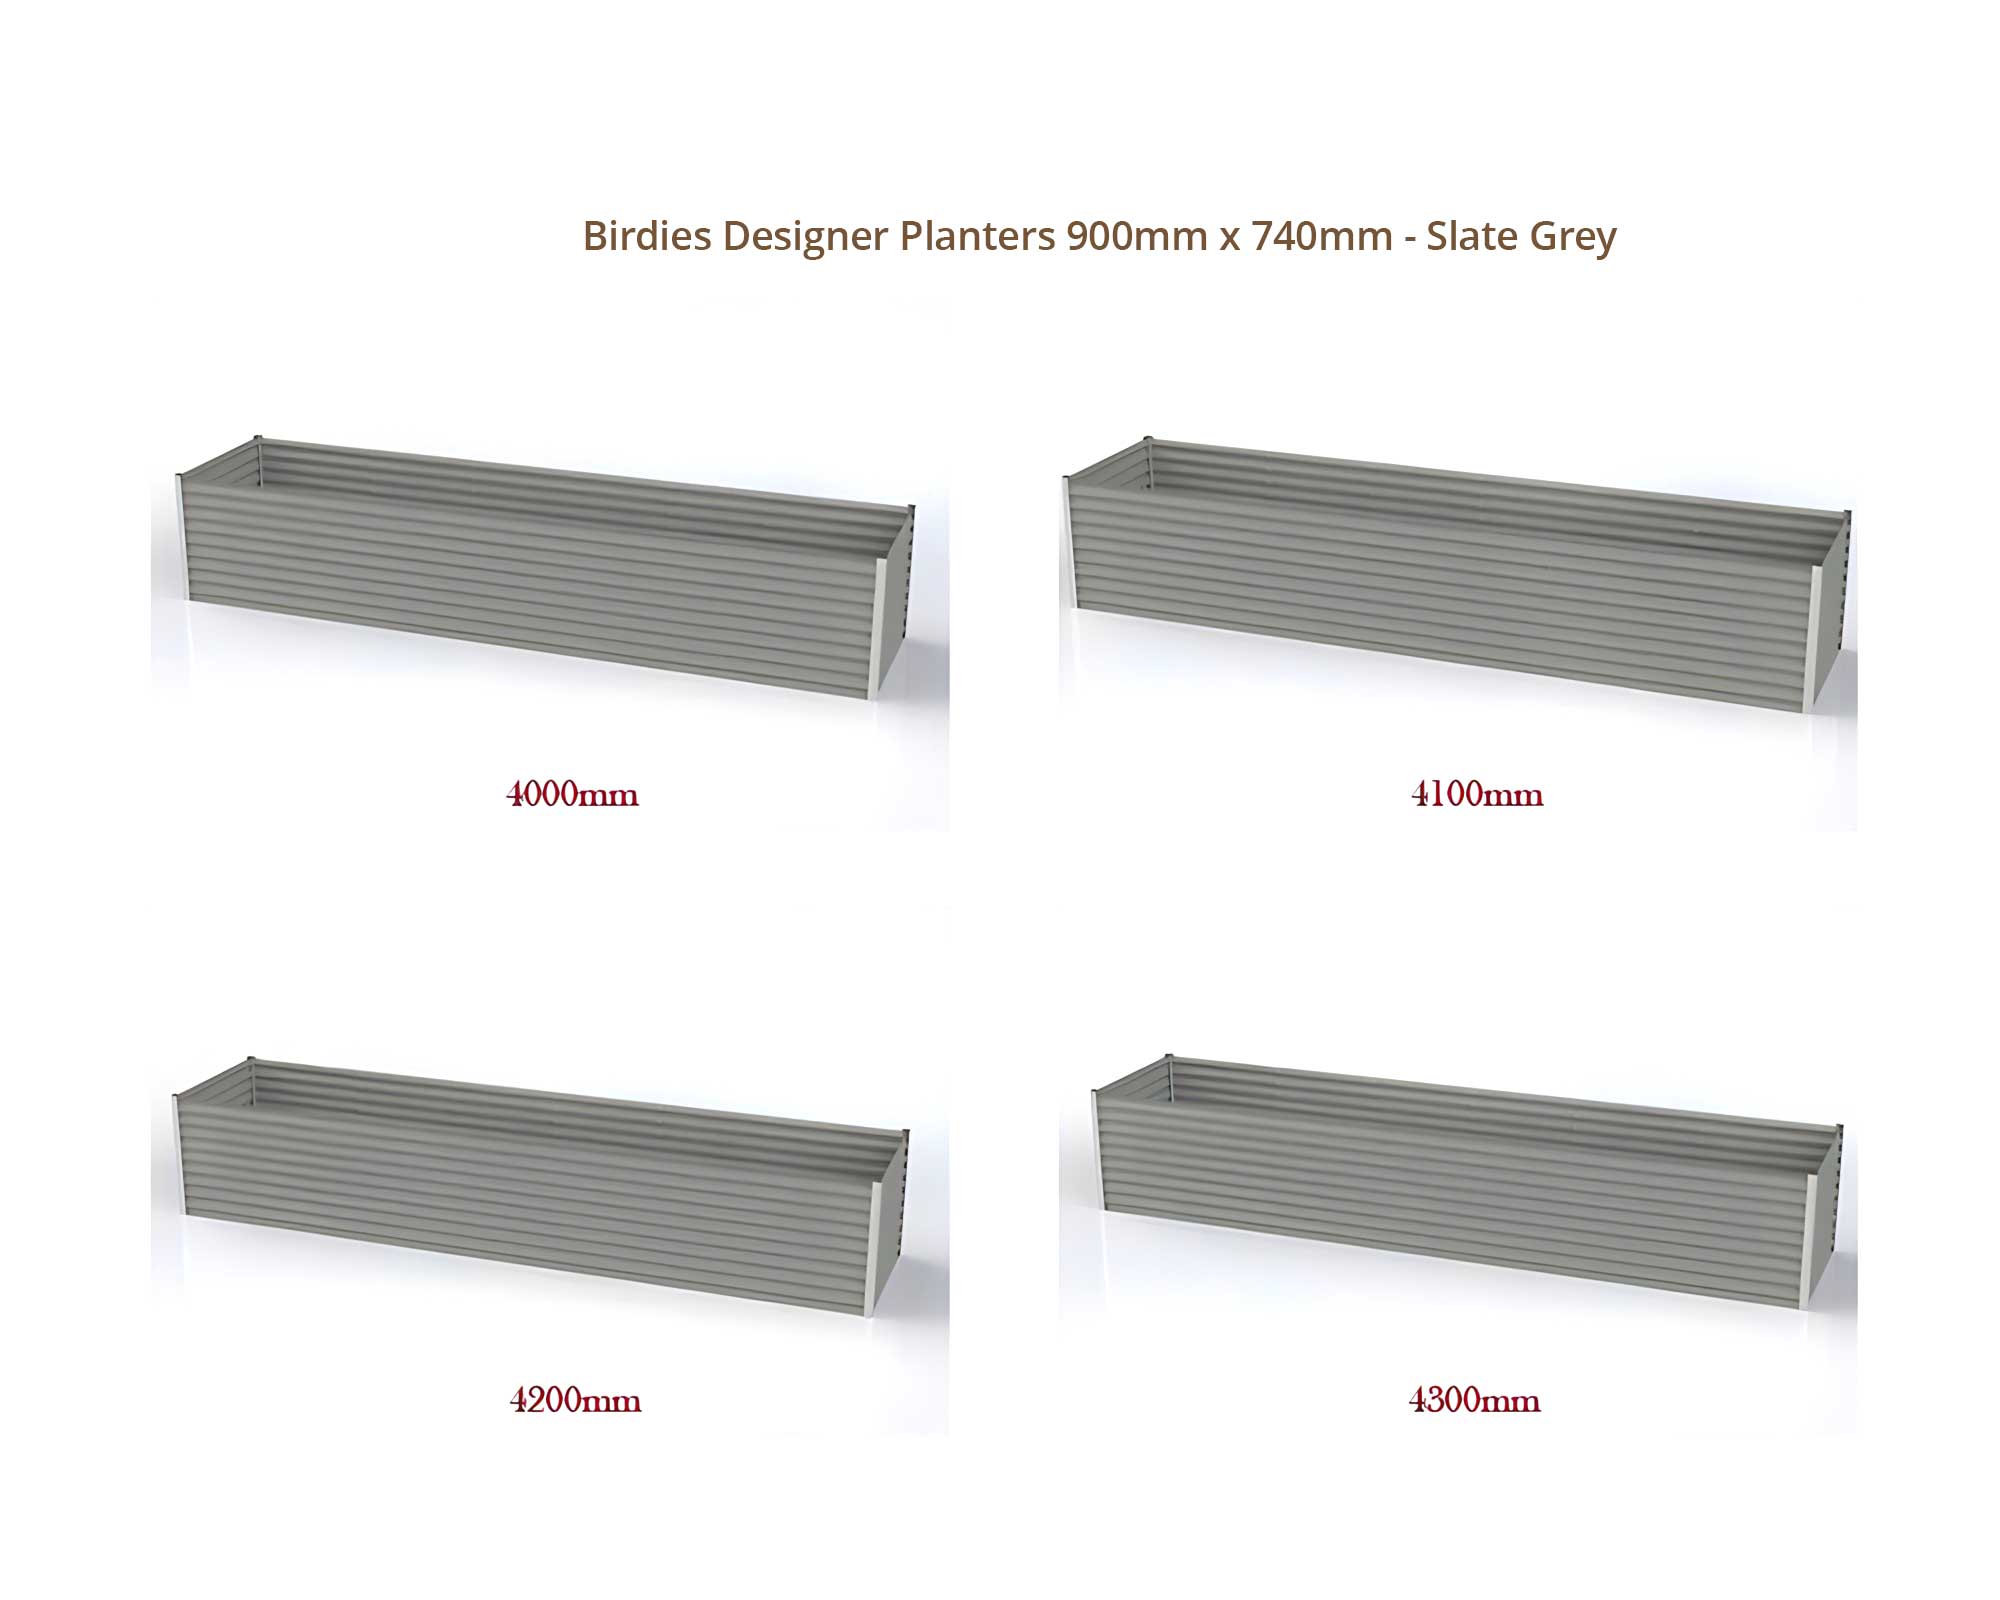 Birdies Designer Planters - 900mm Wide x 740mm High - Slate Grey